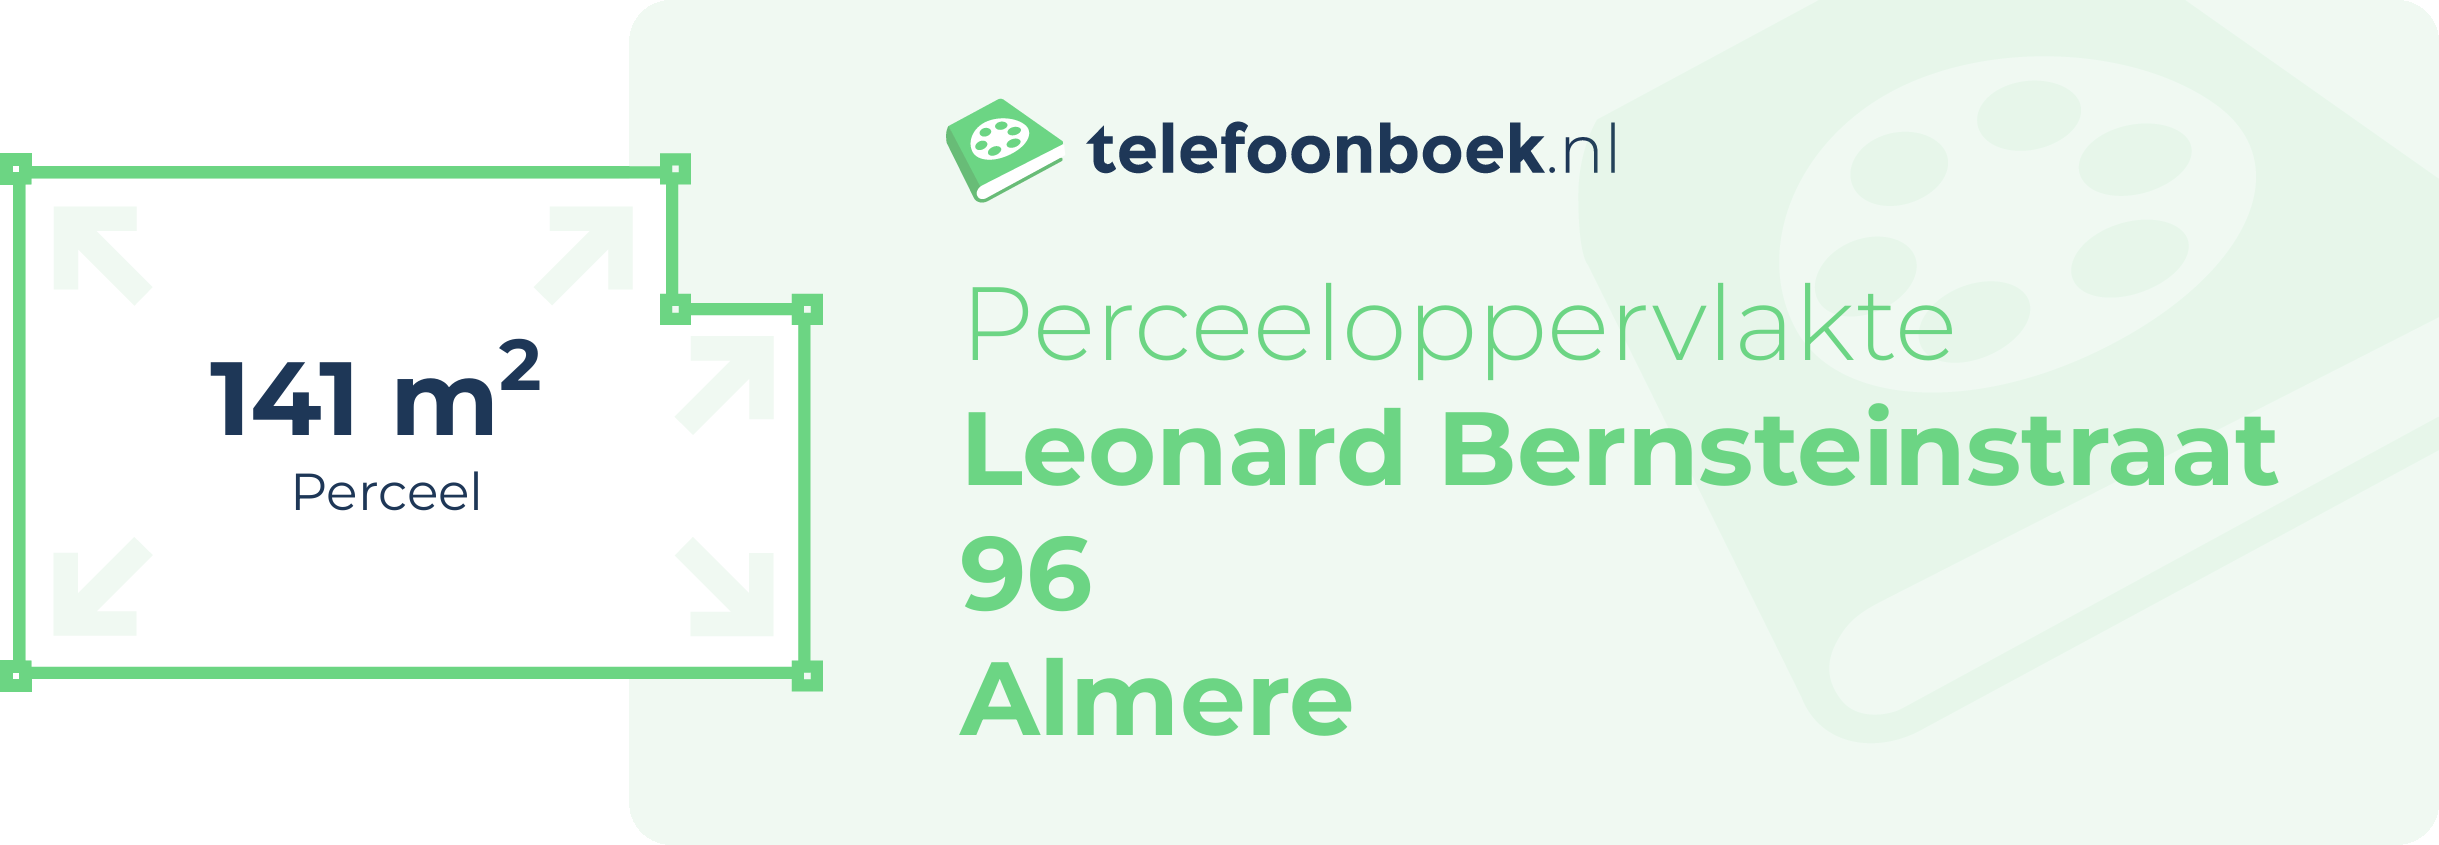 Perceeloppervlakte Leonard Bernsteinstraat 96 Almere